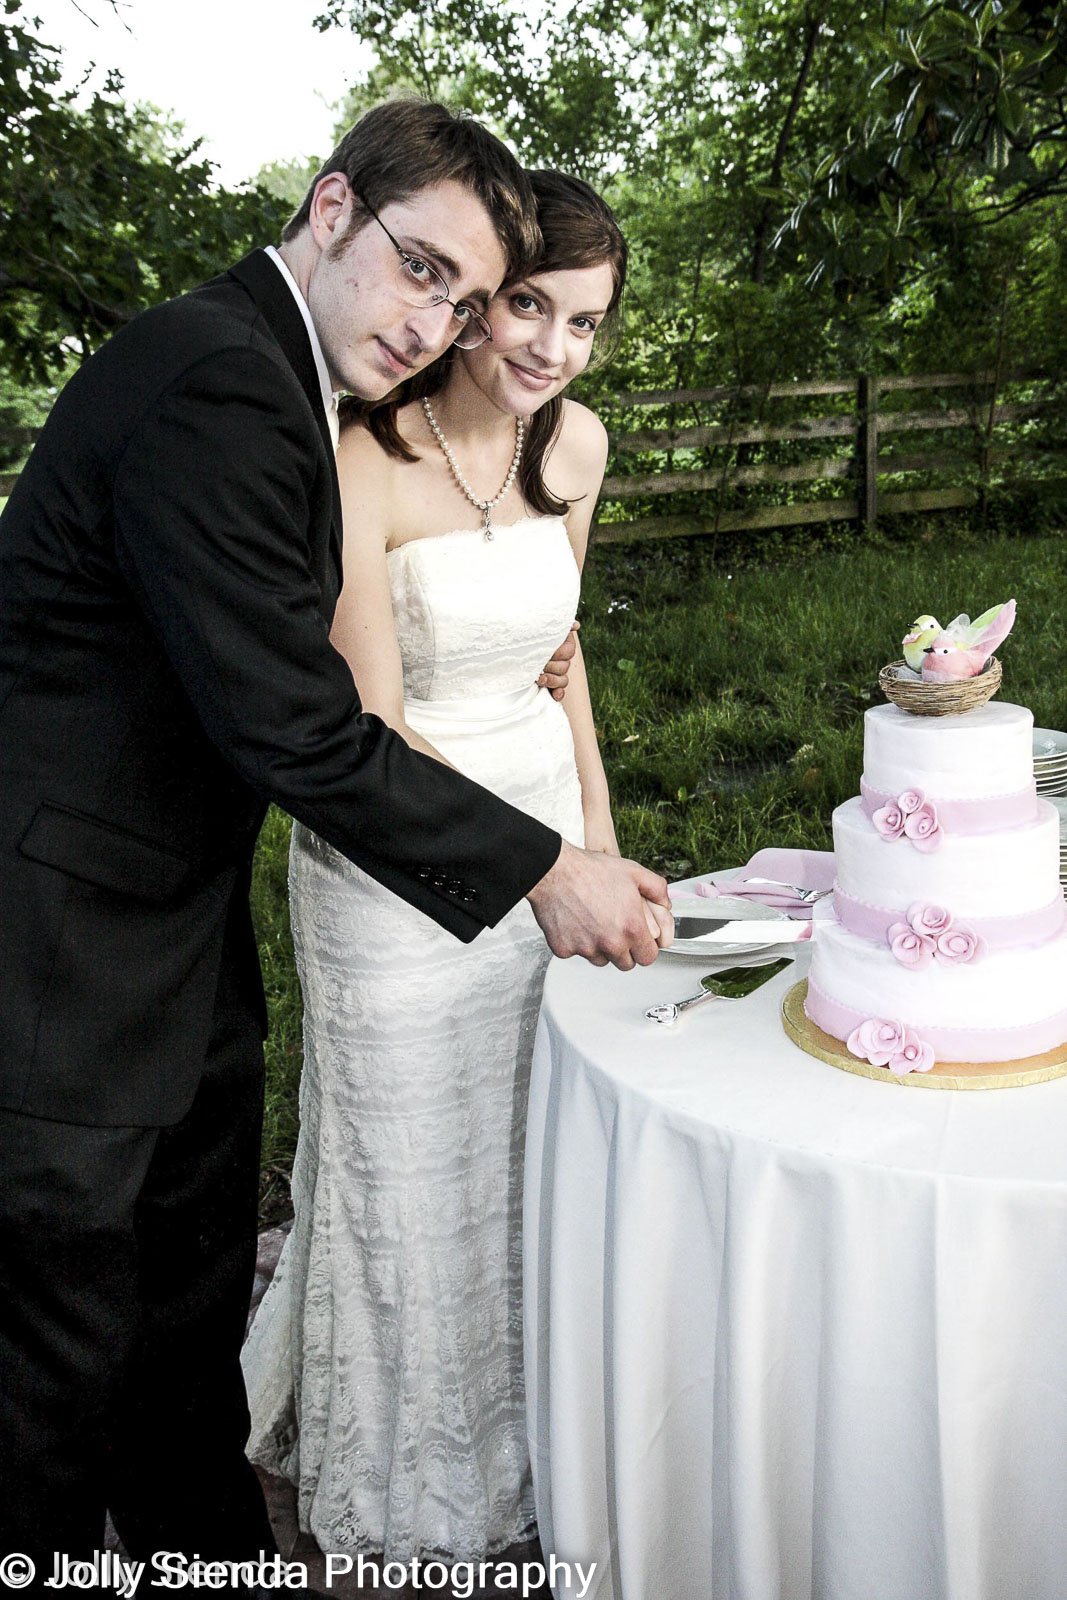 Cutting the wedding cake by Jolly Sienda Photography